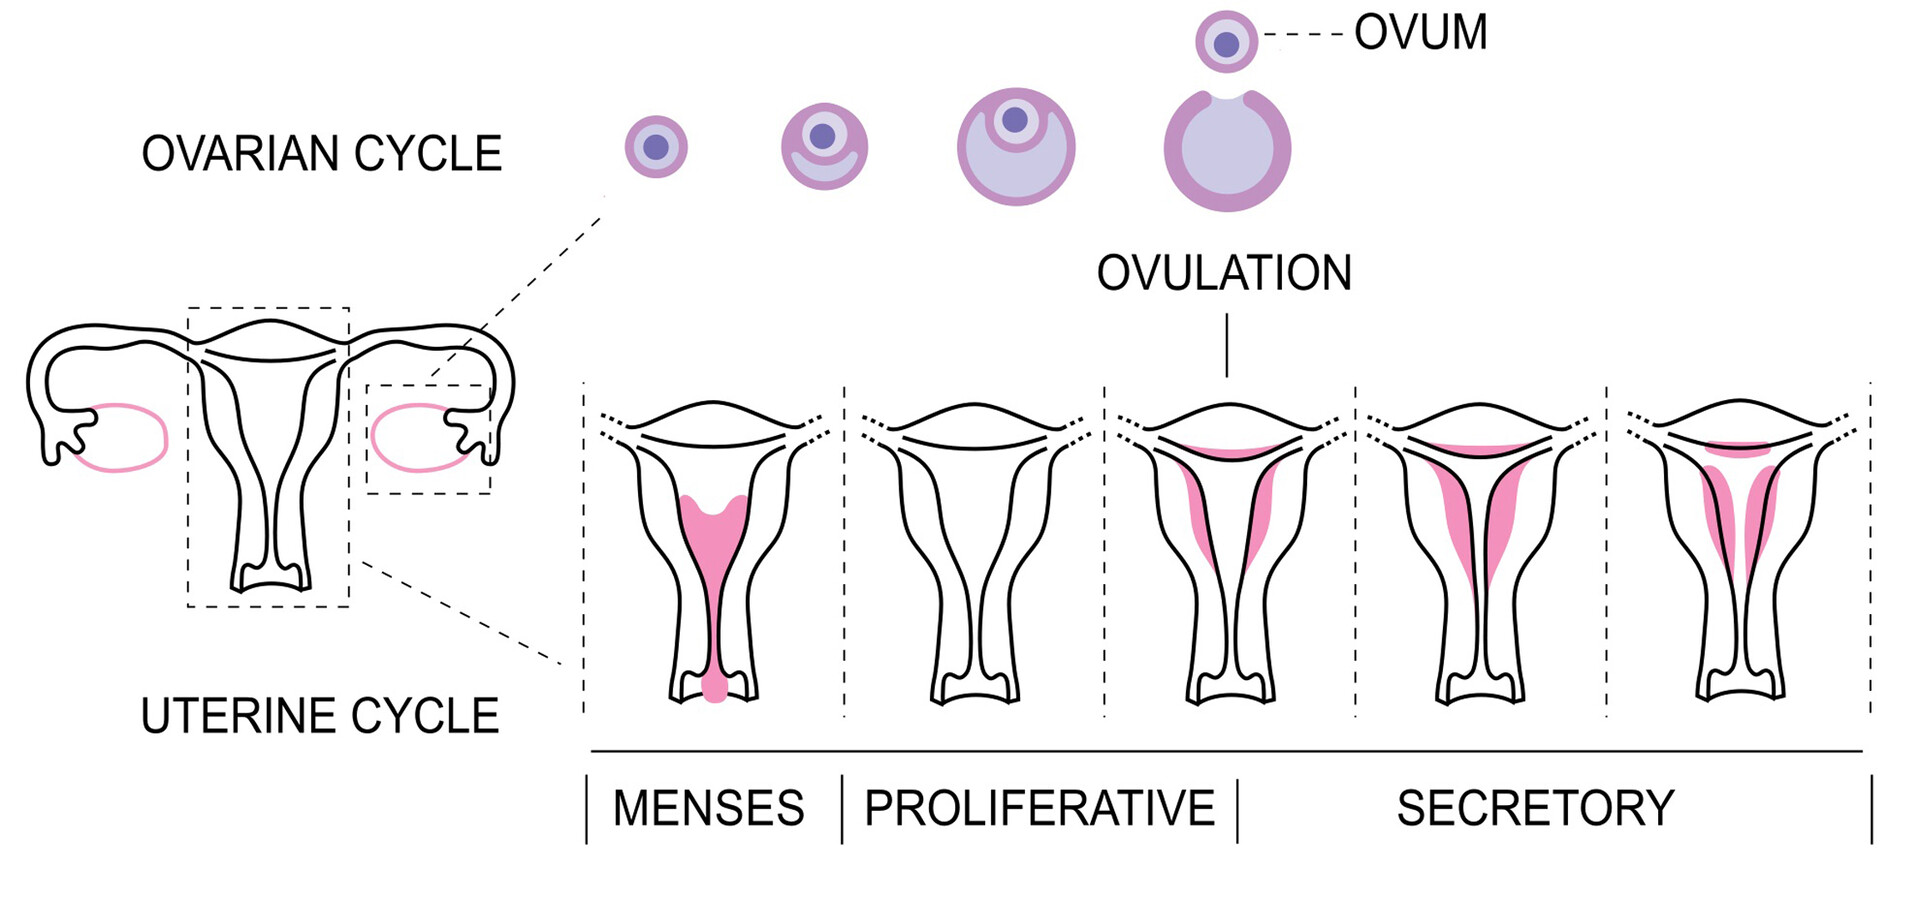 Understanding a Woman's Fertility Cycle 